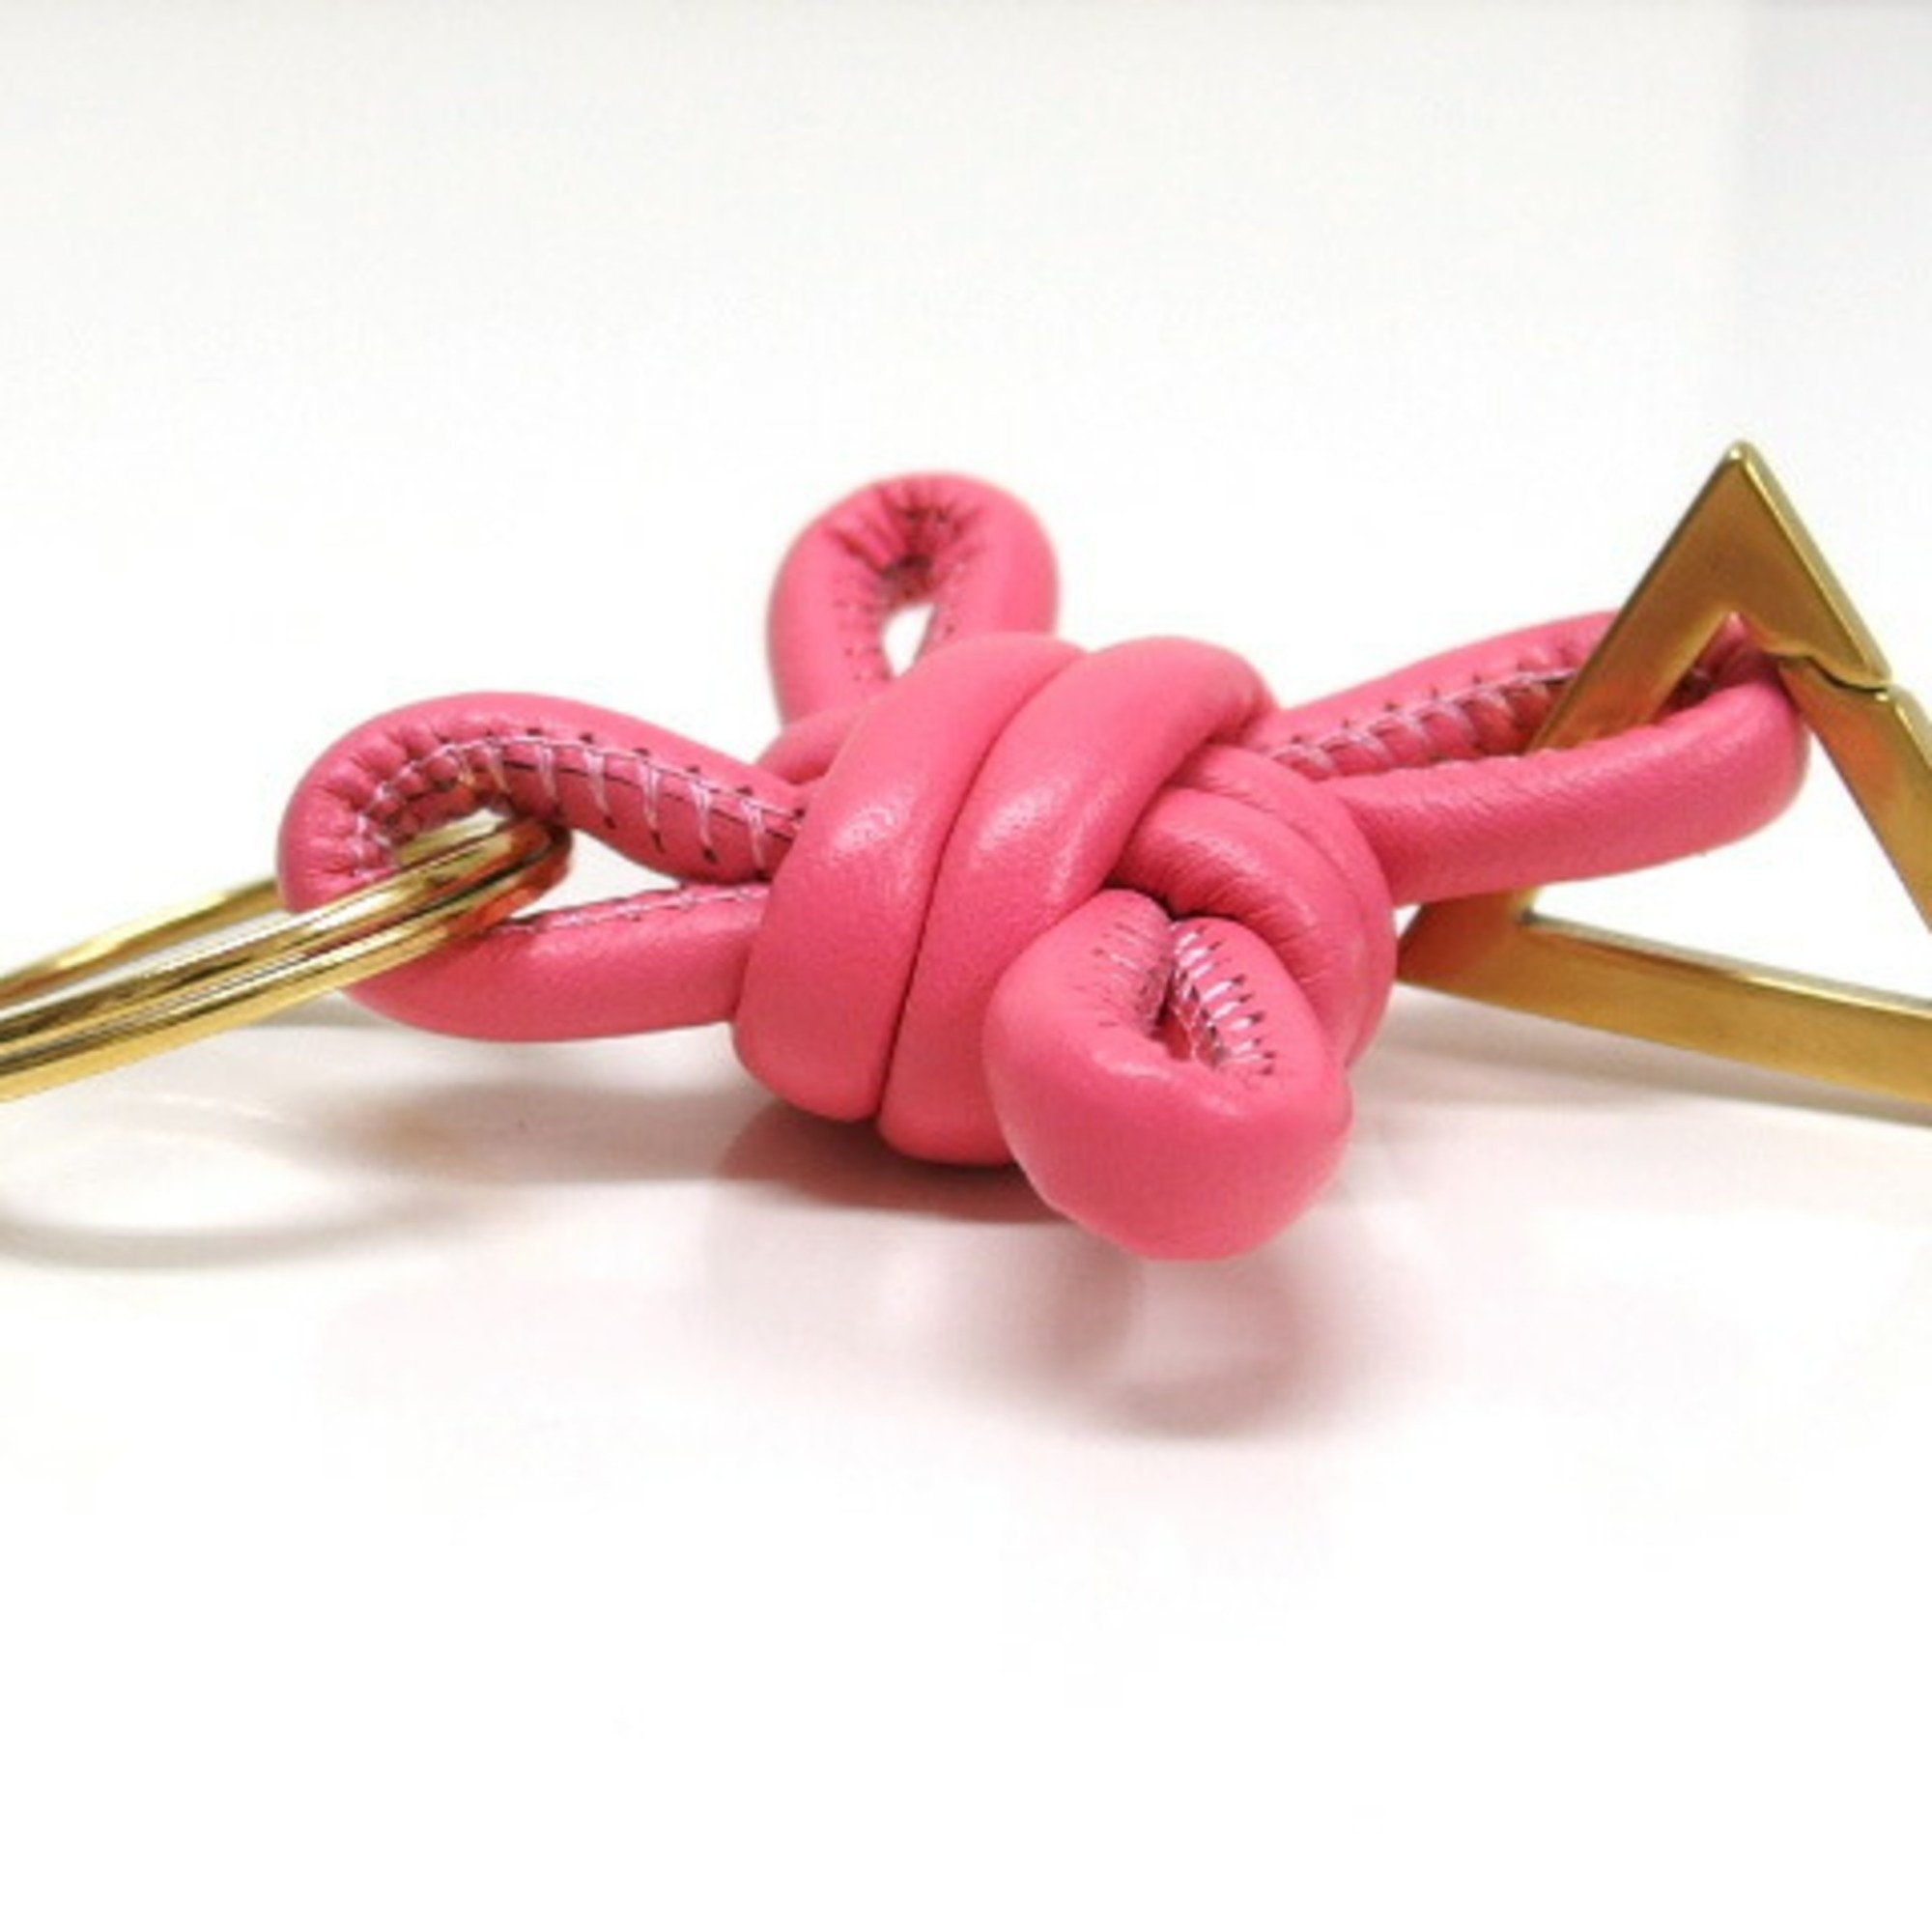 Bottega Veneta Knot Keyring Triangle Metal Pink